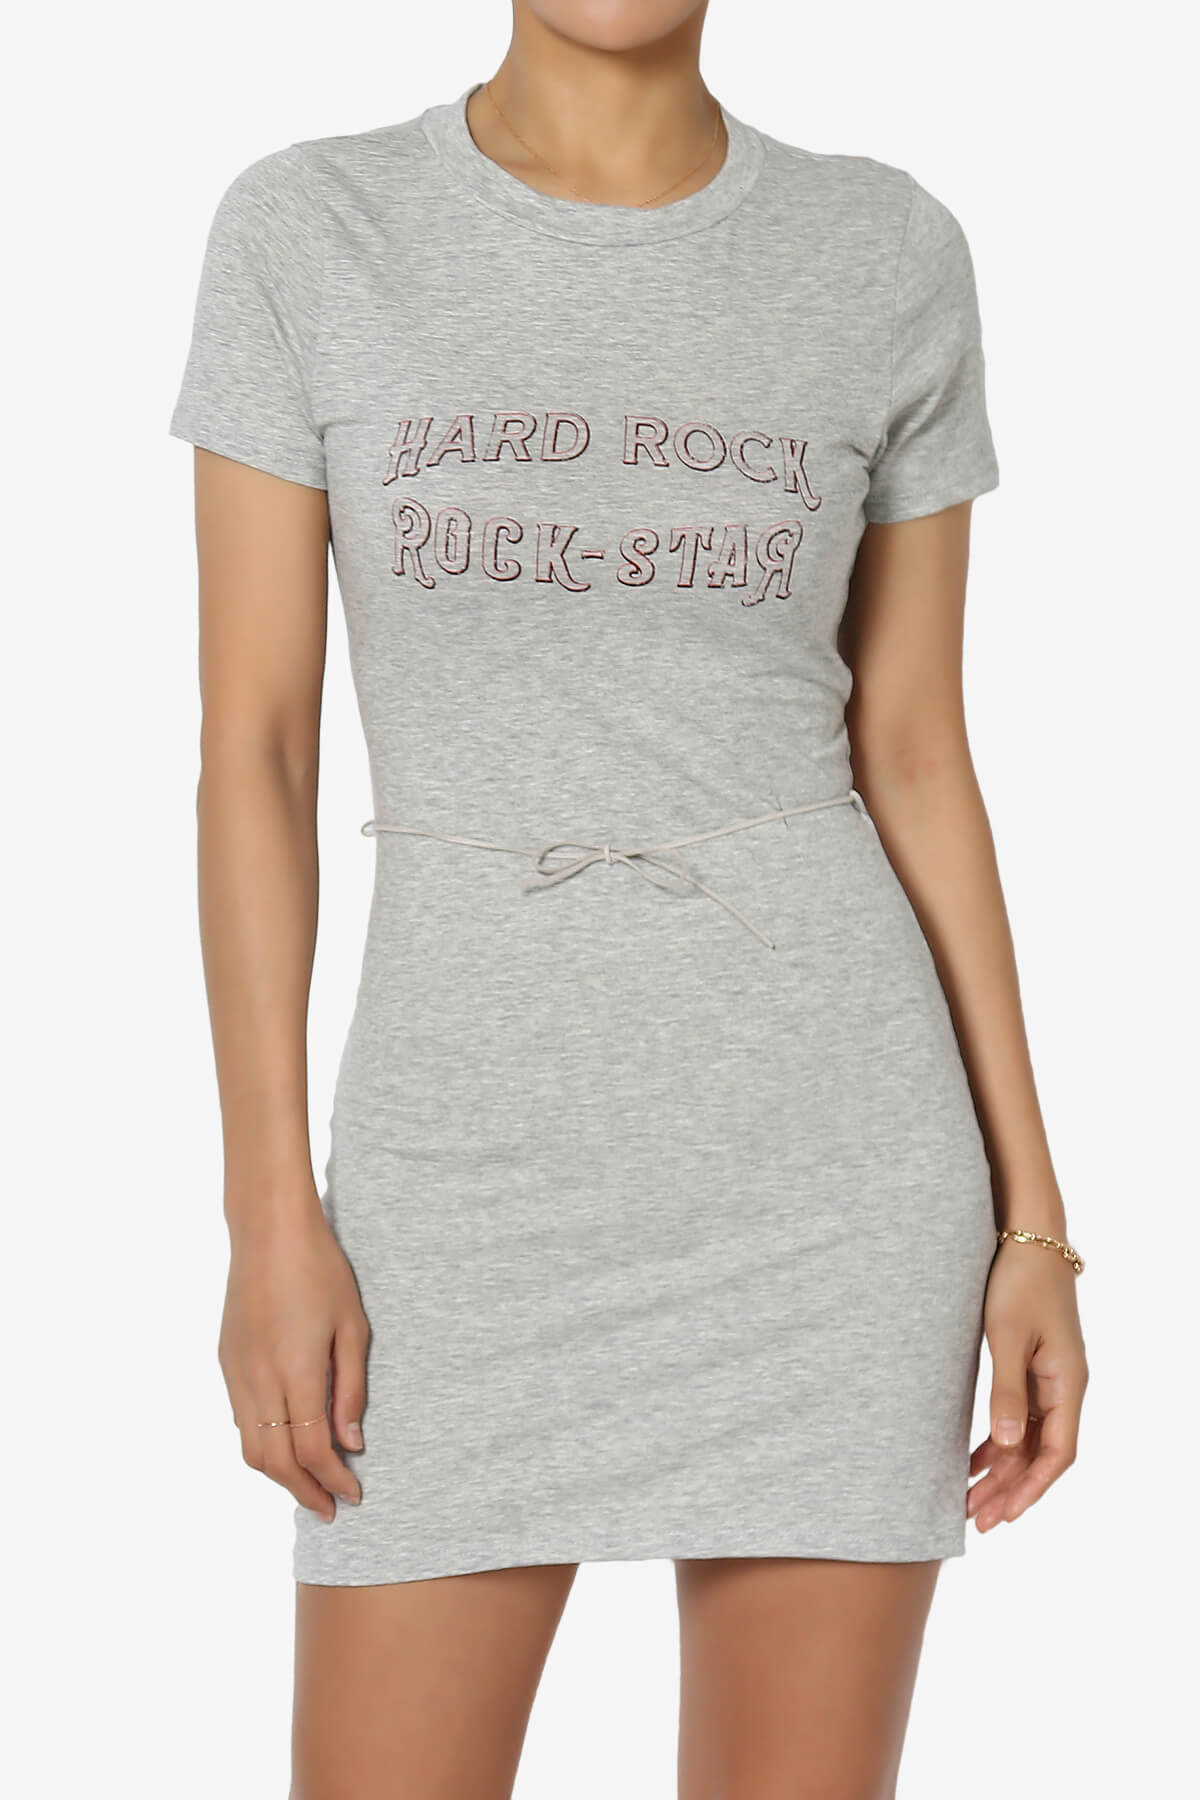 Hard Rock Wing Guitar Printed Mini T-Shirt Dress HEATHER GREY_1